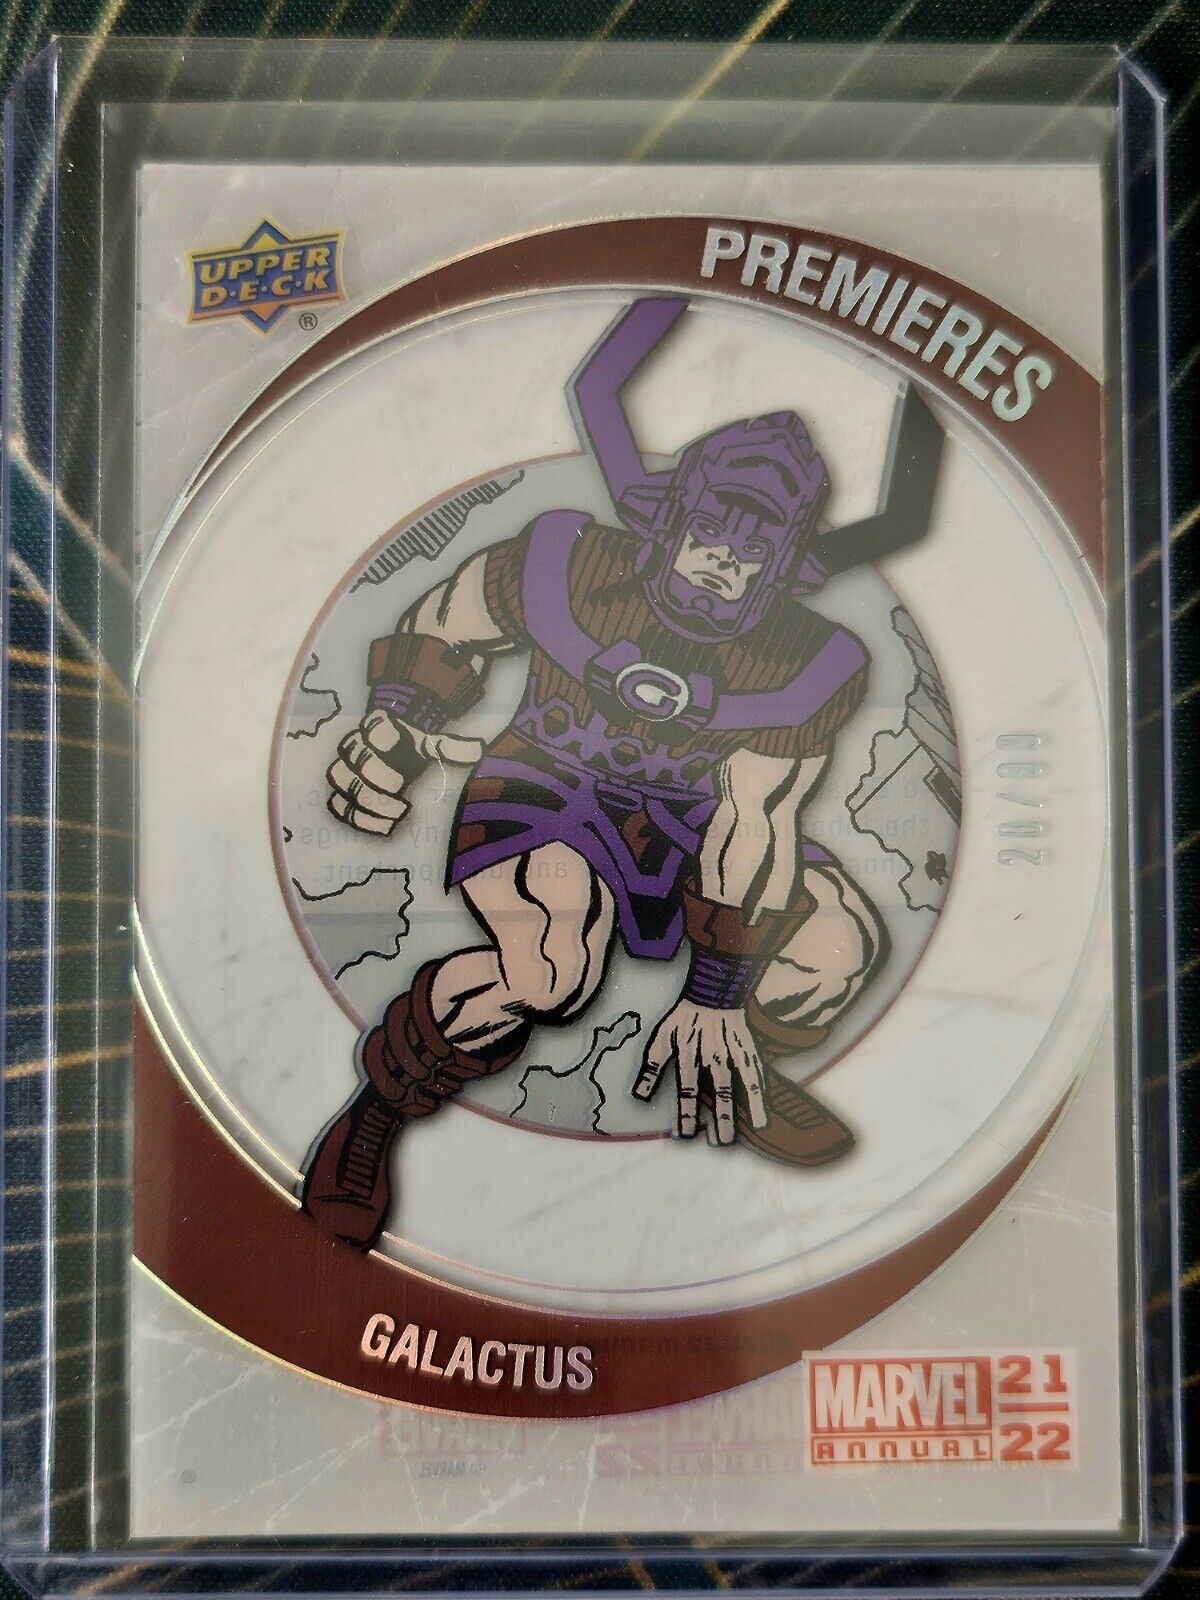 2021-22 Upper Deck Marvel Annual - Premieres Achievement - Galactus - /99 